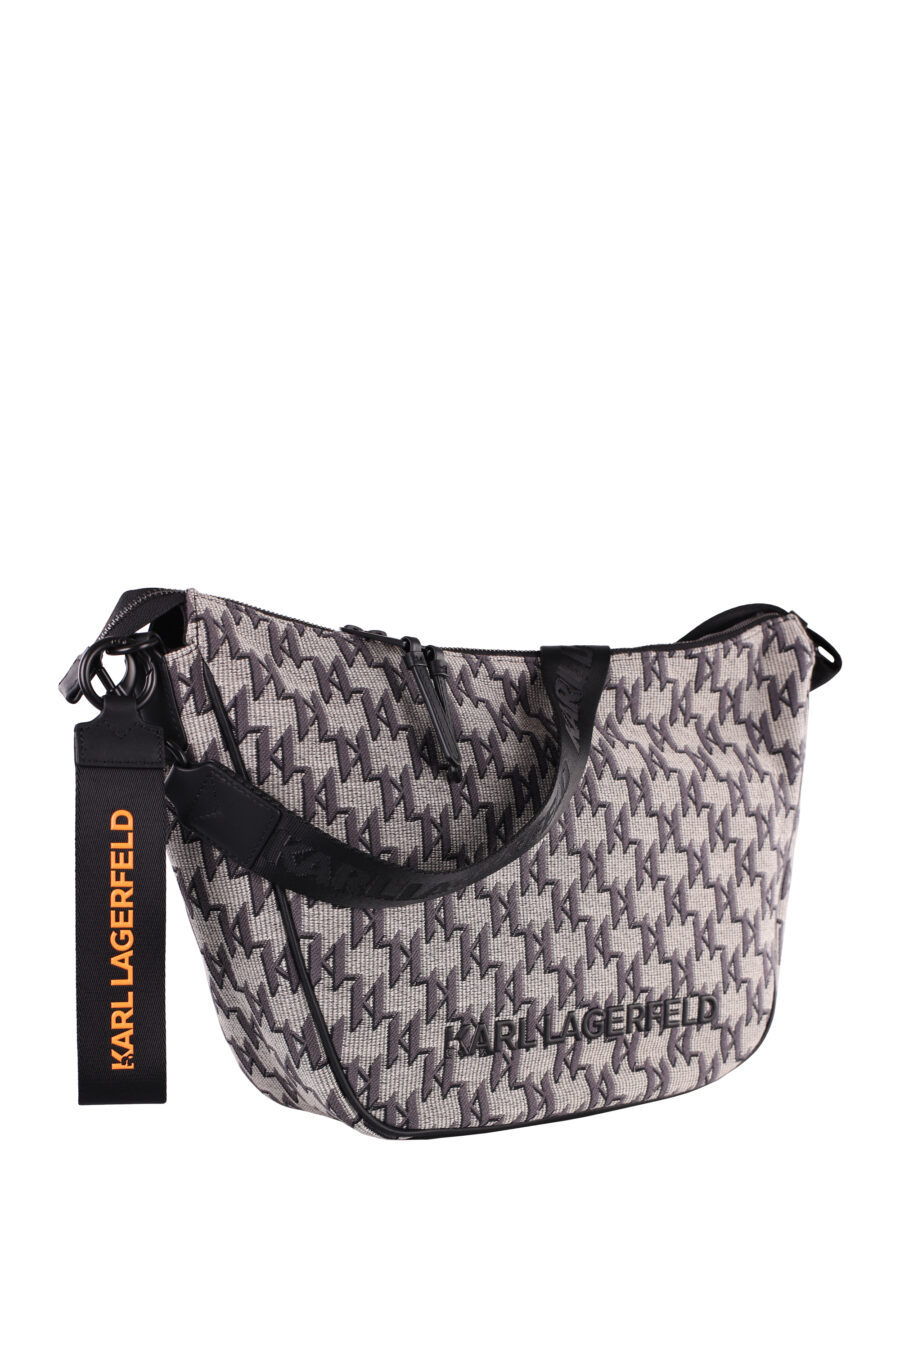 Hobo style shoulder bag with monogram logo - IMG 6053